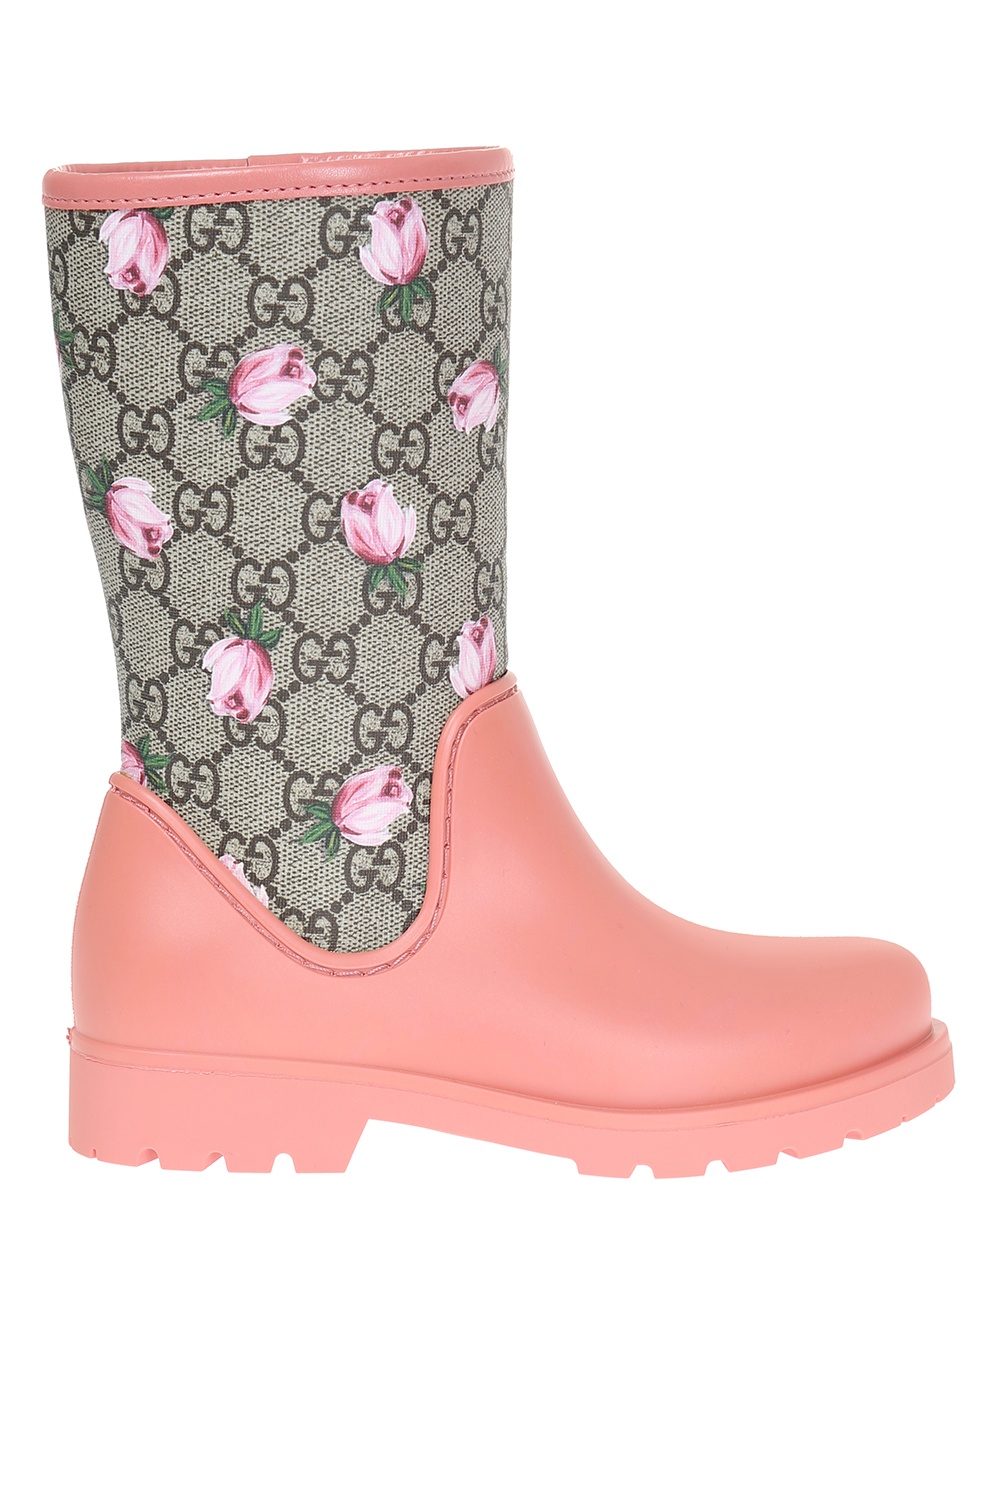 gucci rain boots pink